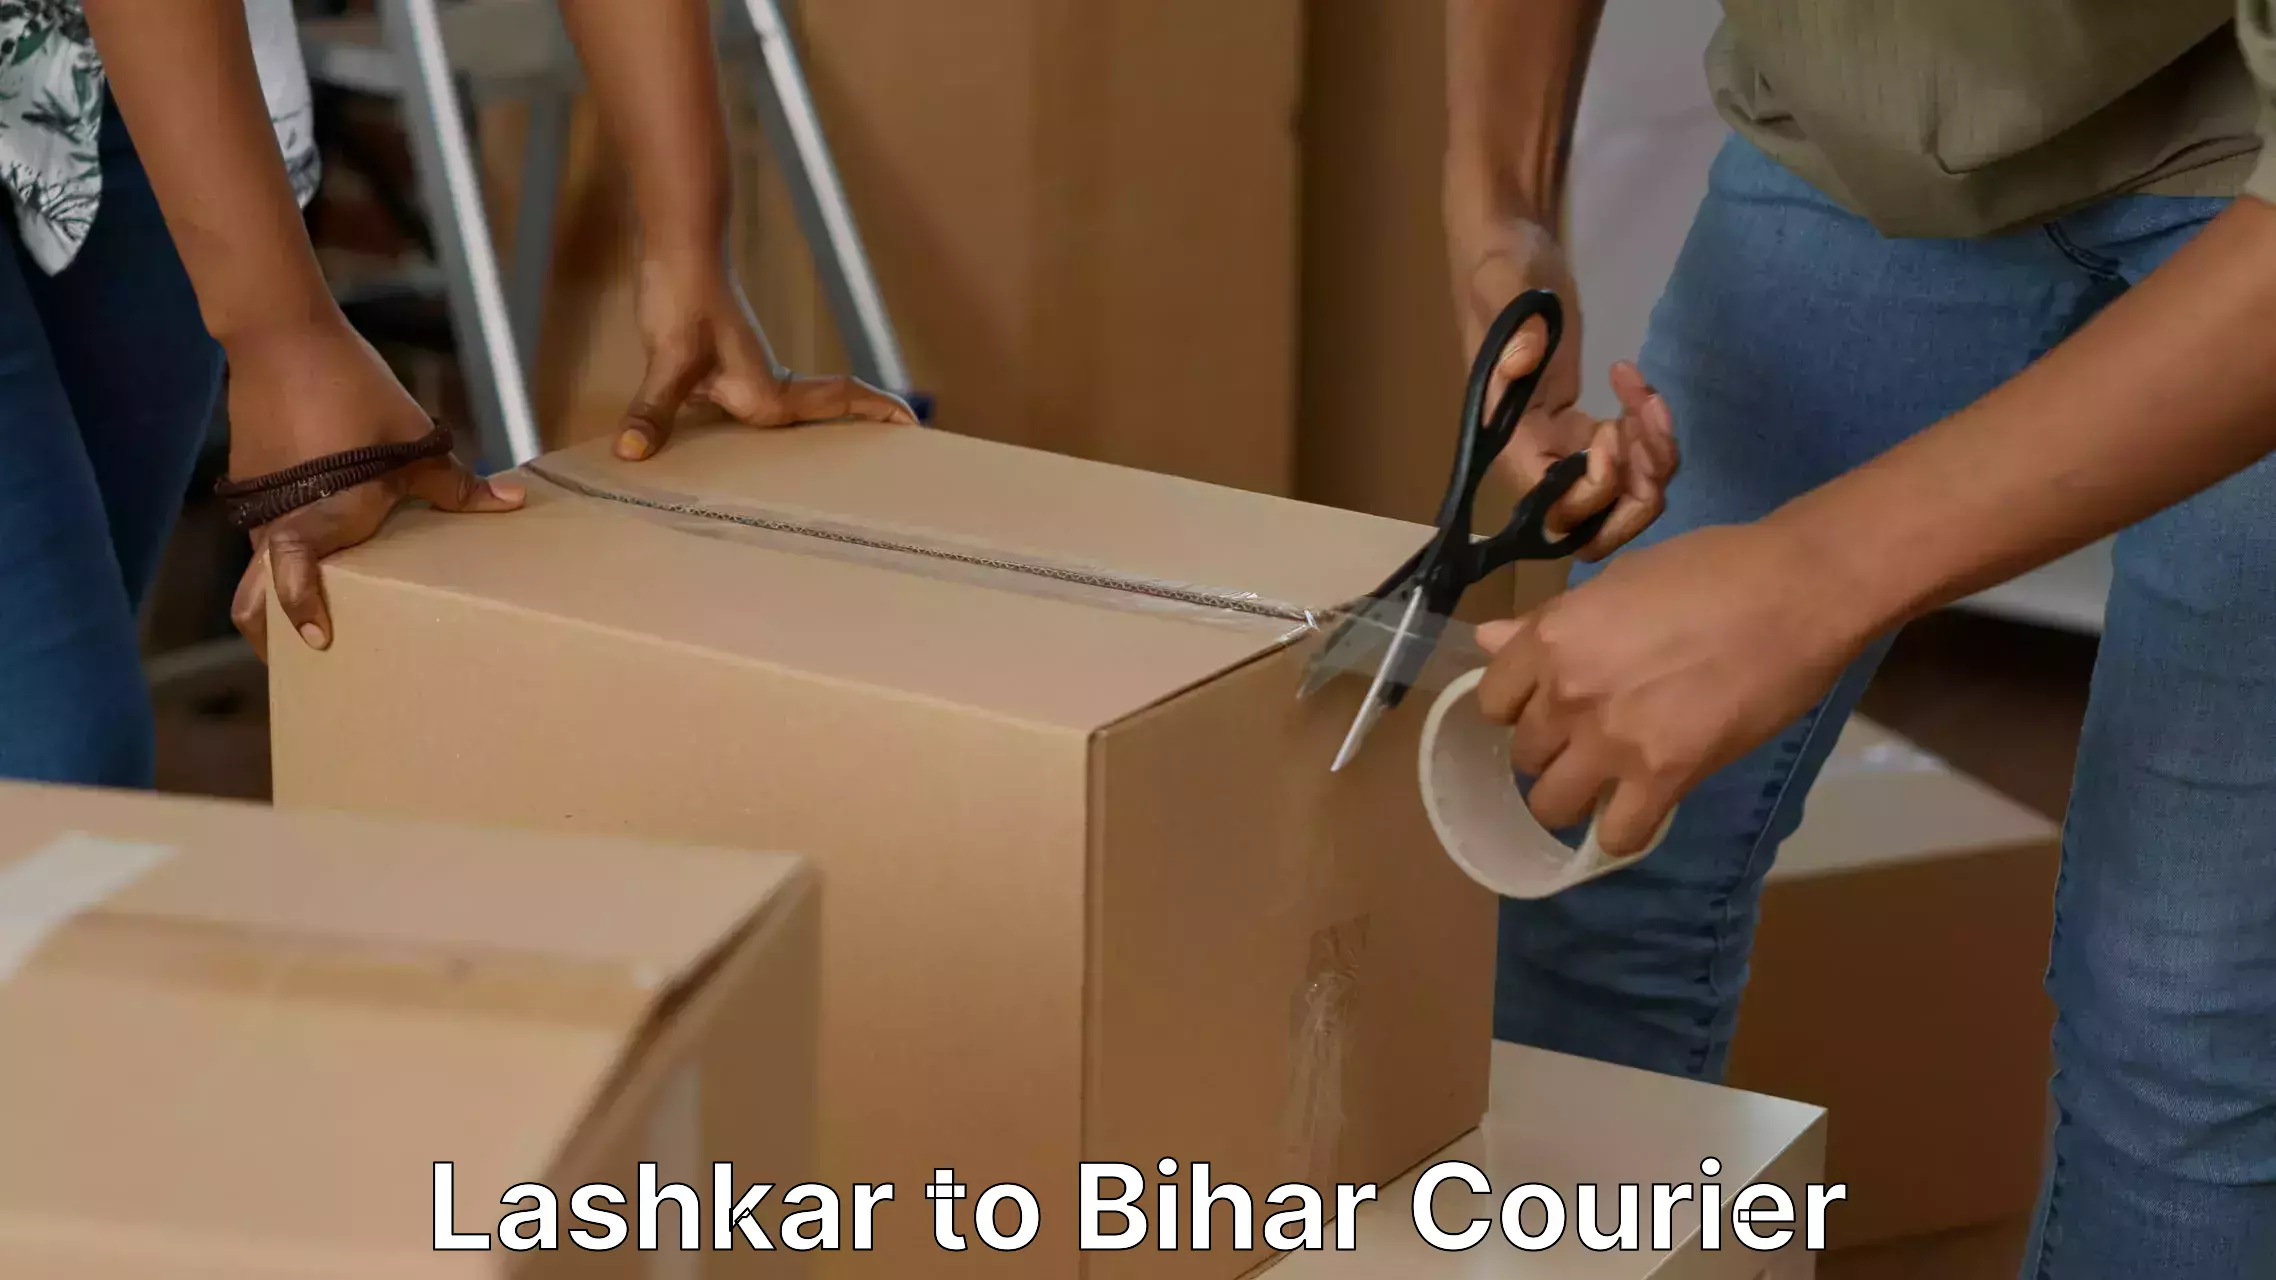 Professional moving company Lashkar to Bihar